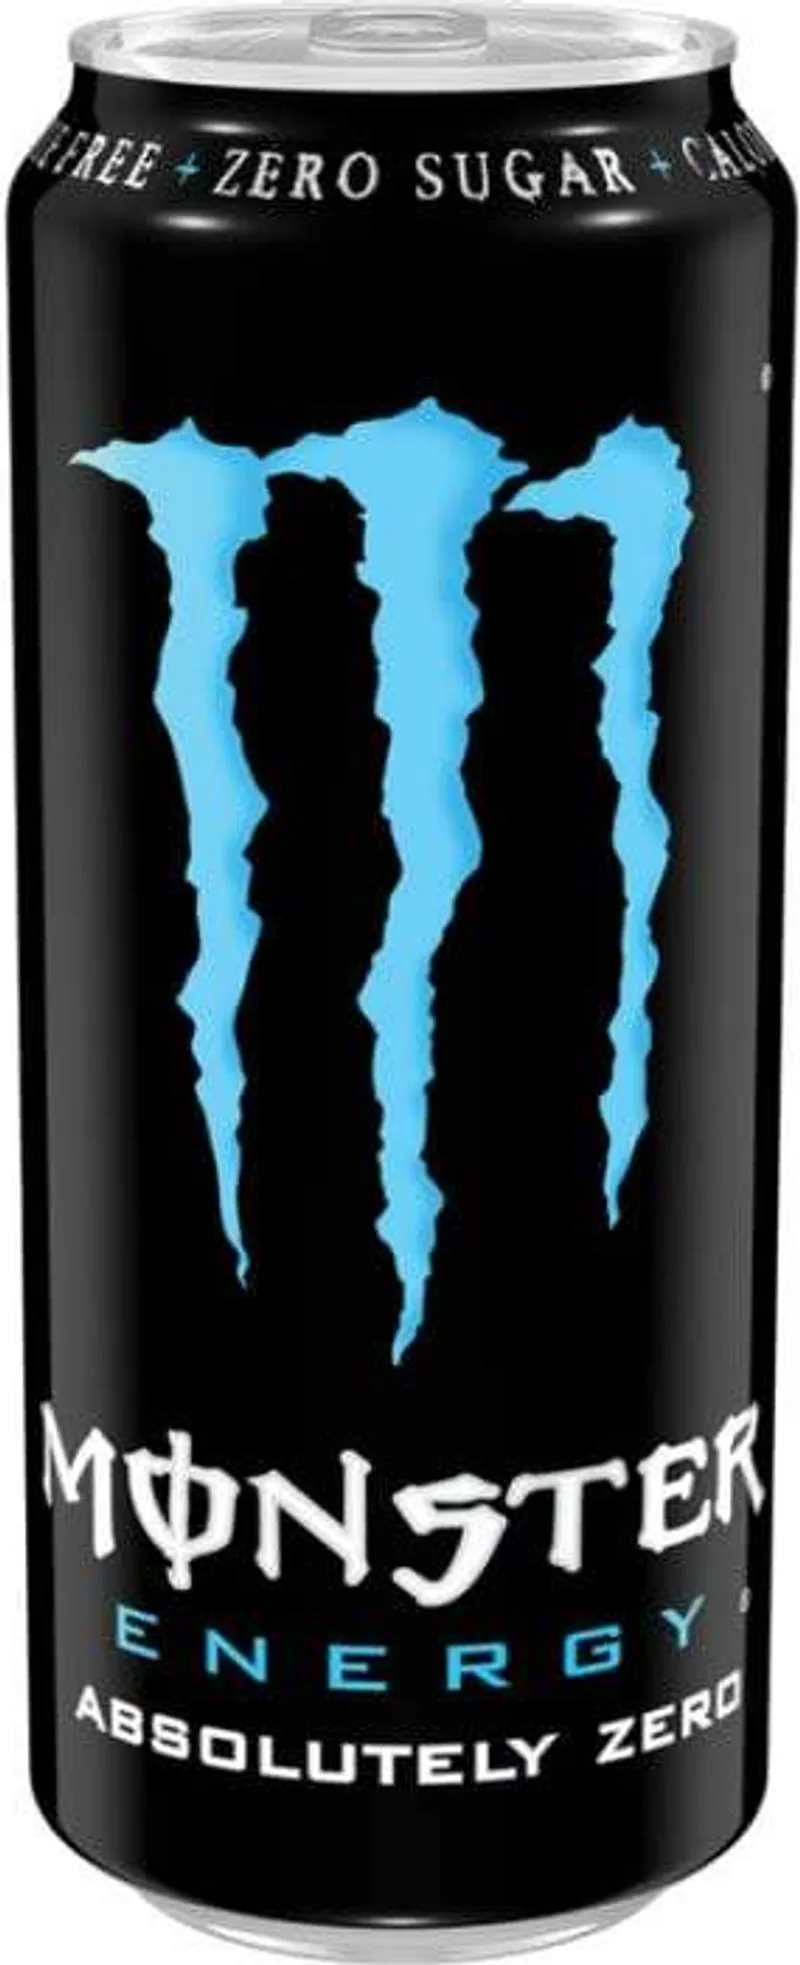 Енергийна напитка Monster Absolutely zero (500мл)